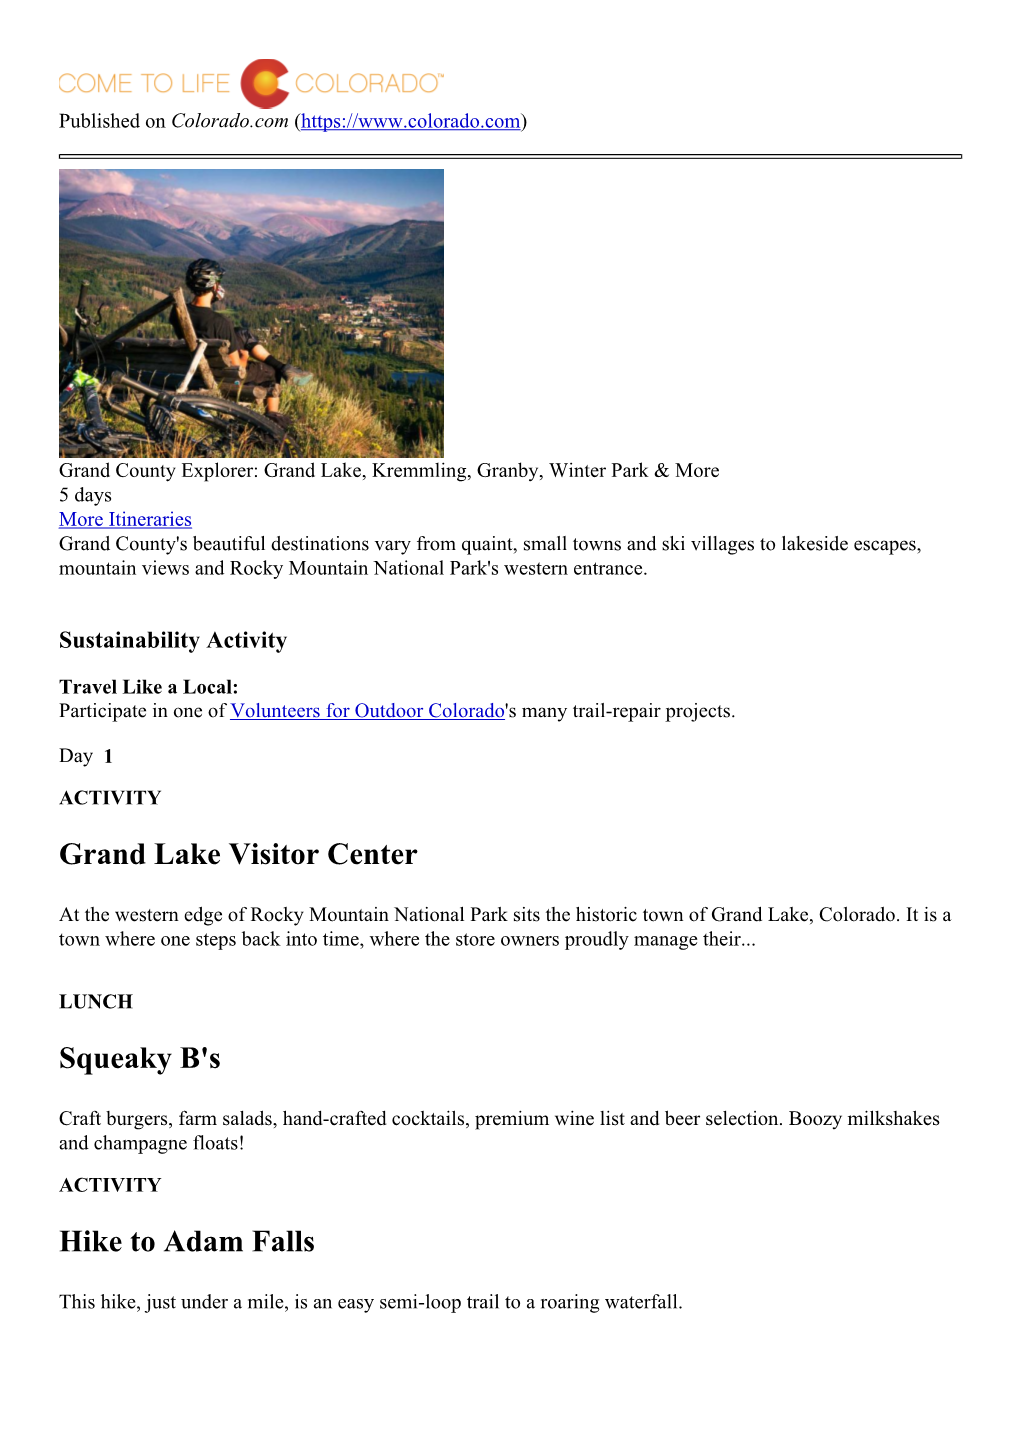 Grand County Explorer: Grand Lake, Kremmling, Granby